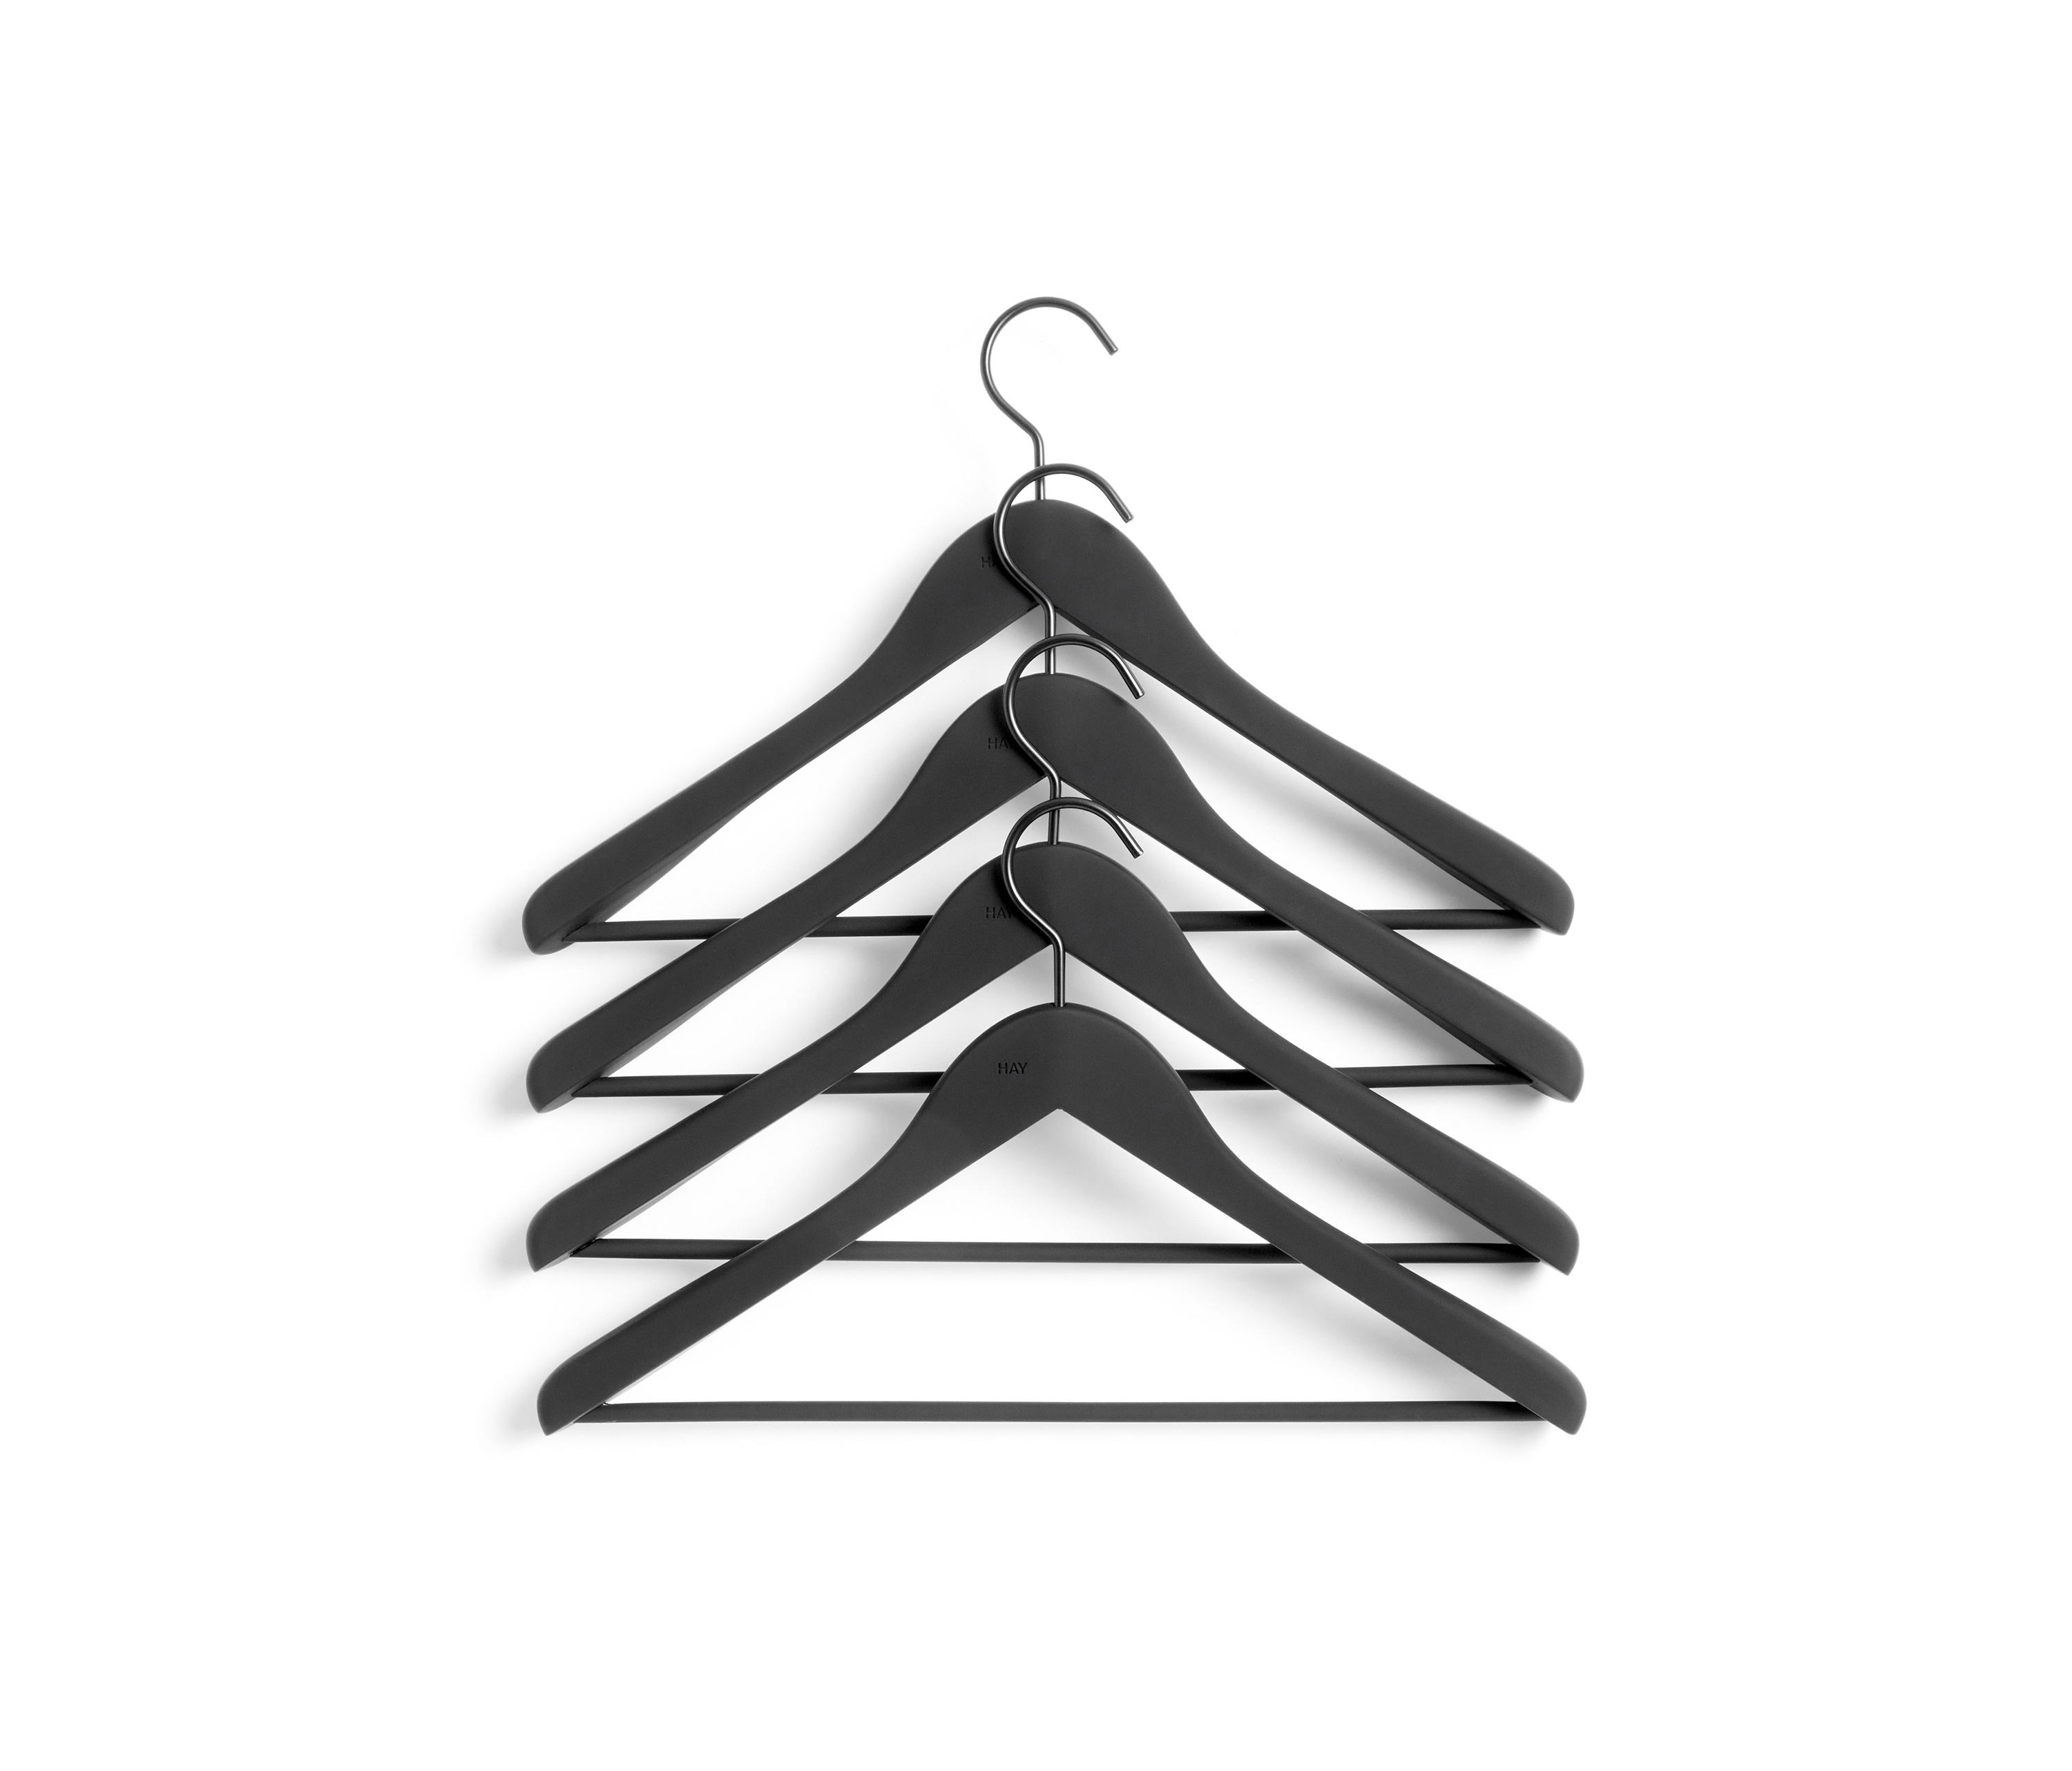 Soft coat hanger wide, black, 4 pcs